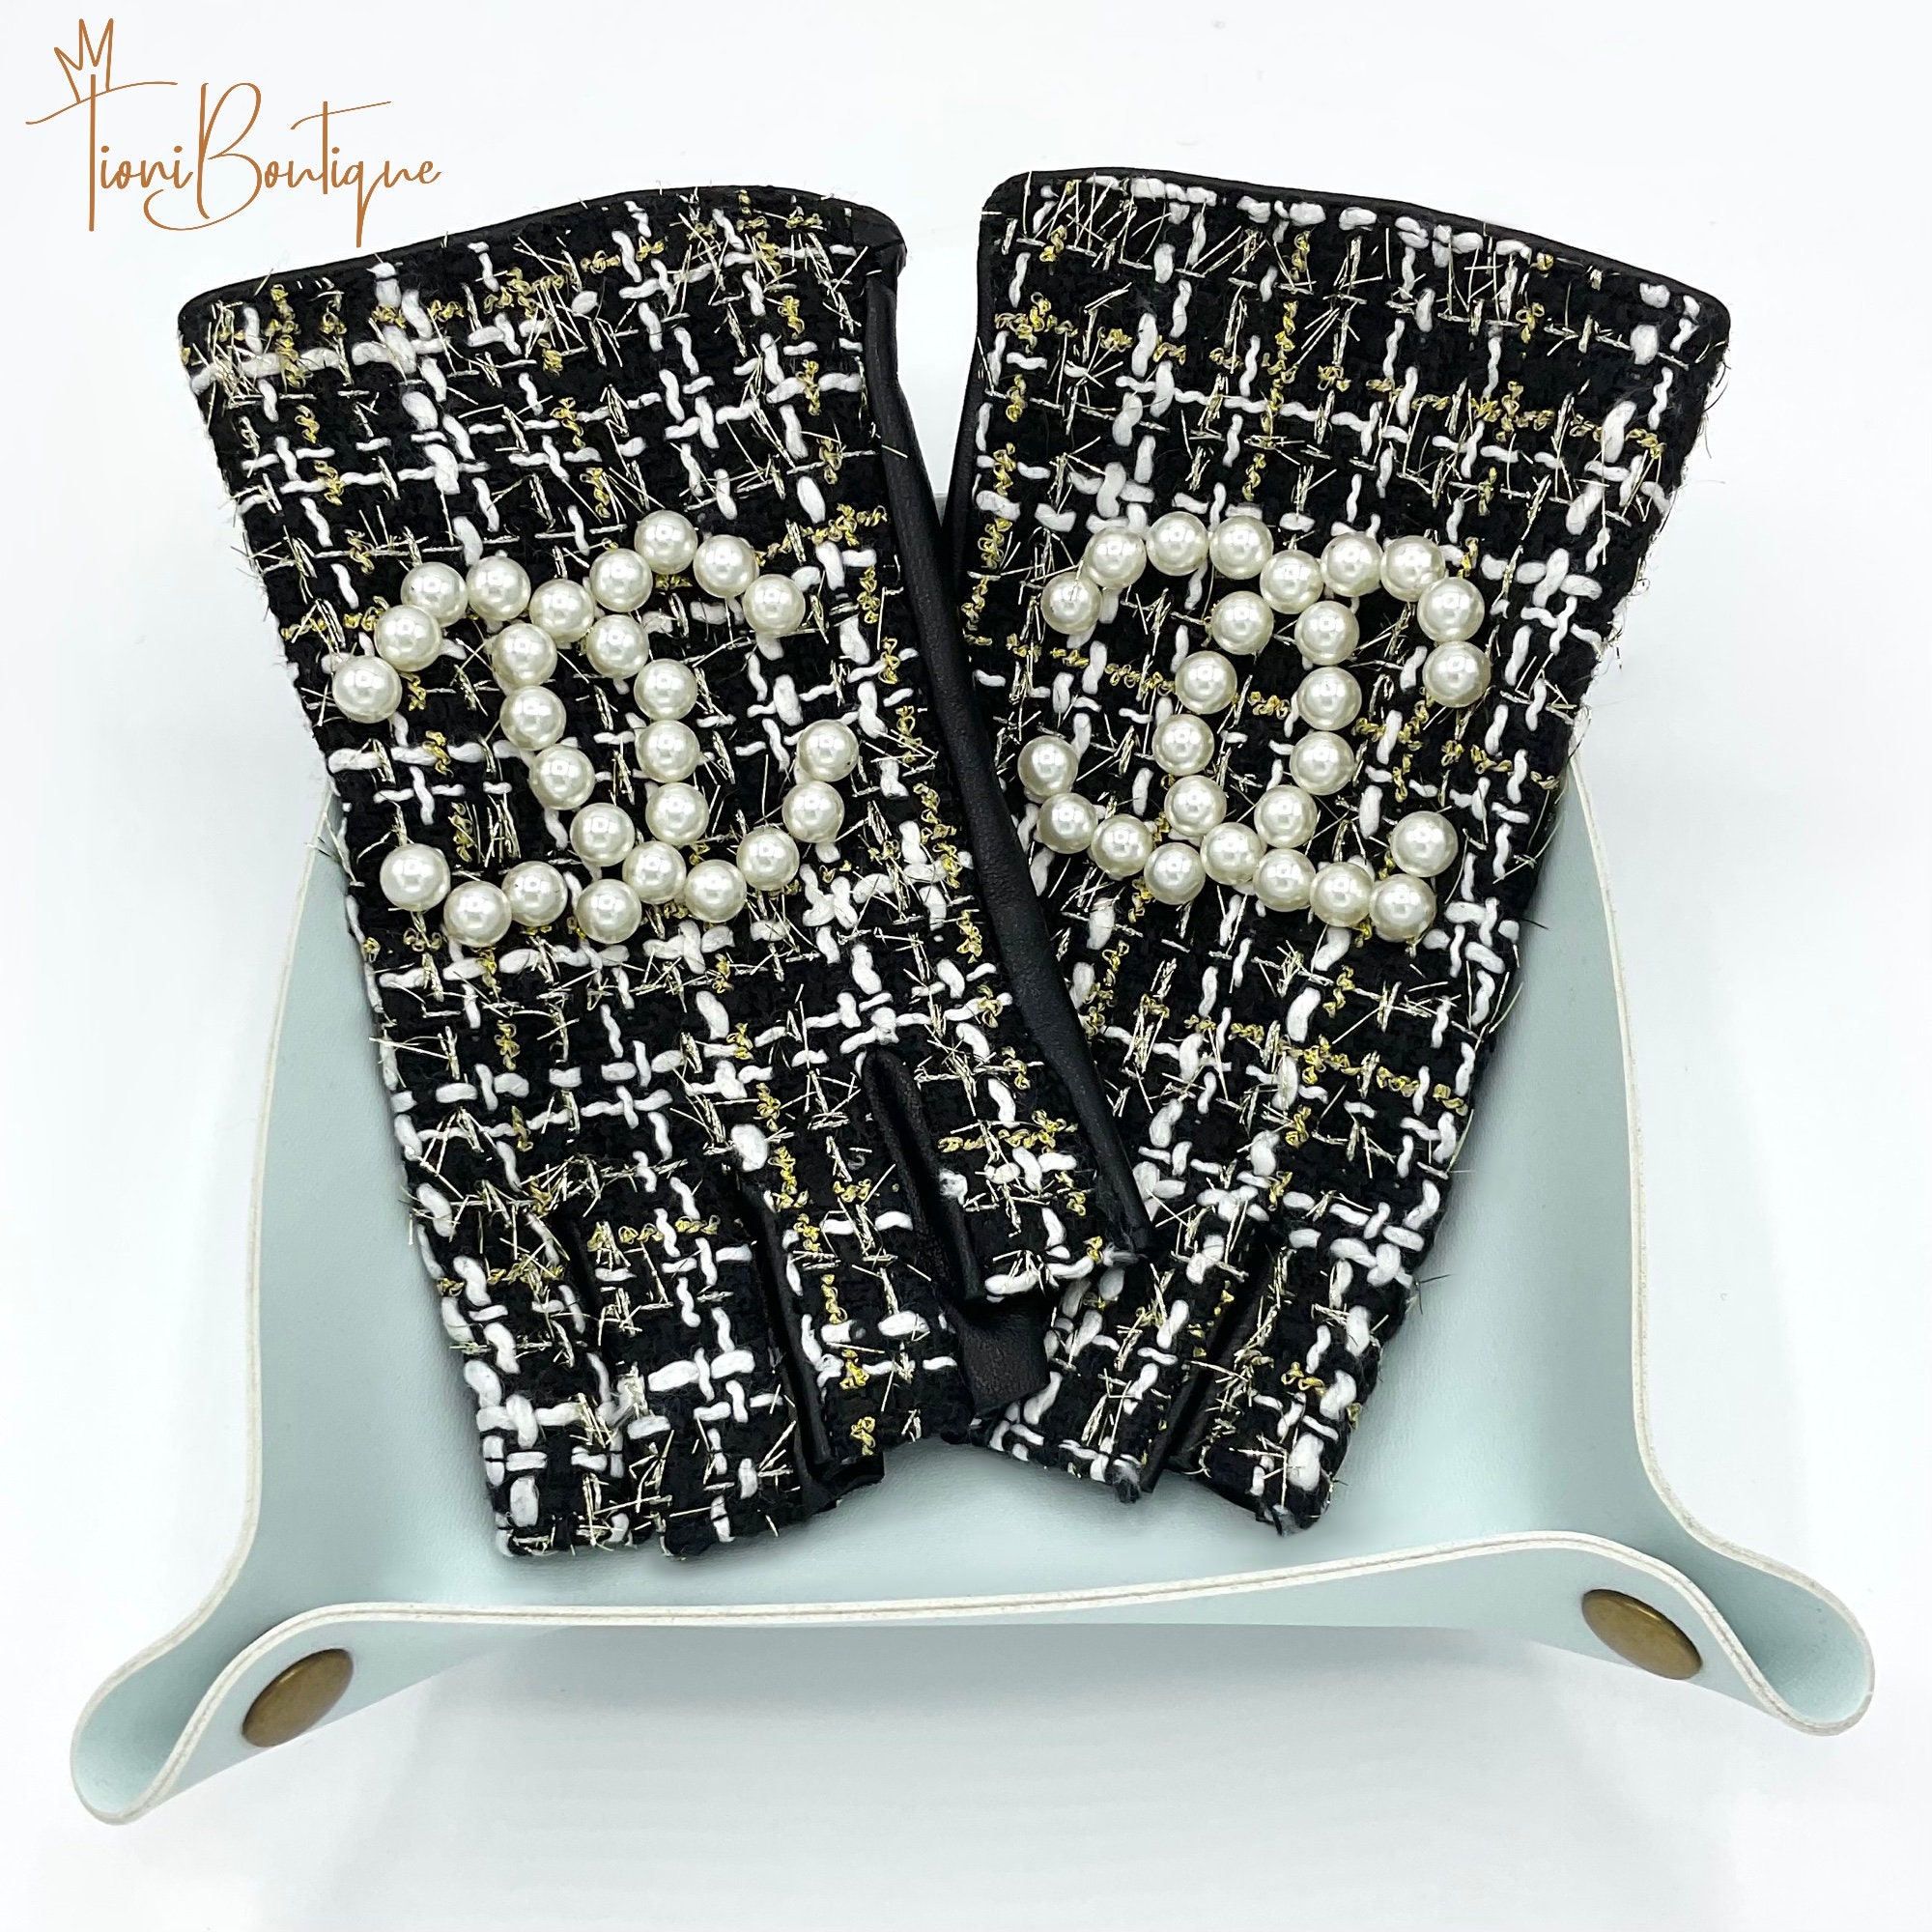 Chanel Navy Lambskin & White Tweed Fingerless Gloves Q6A2ON1LMB001